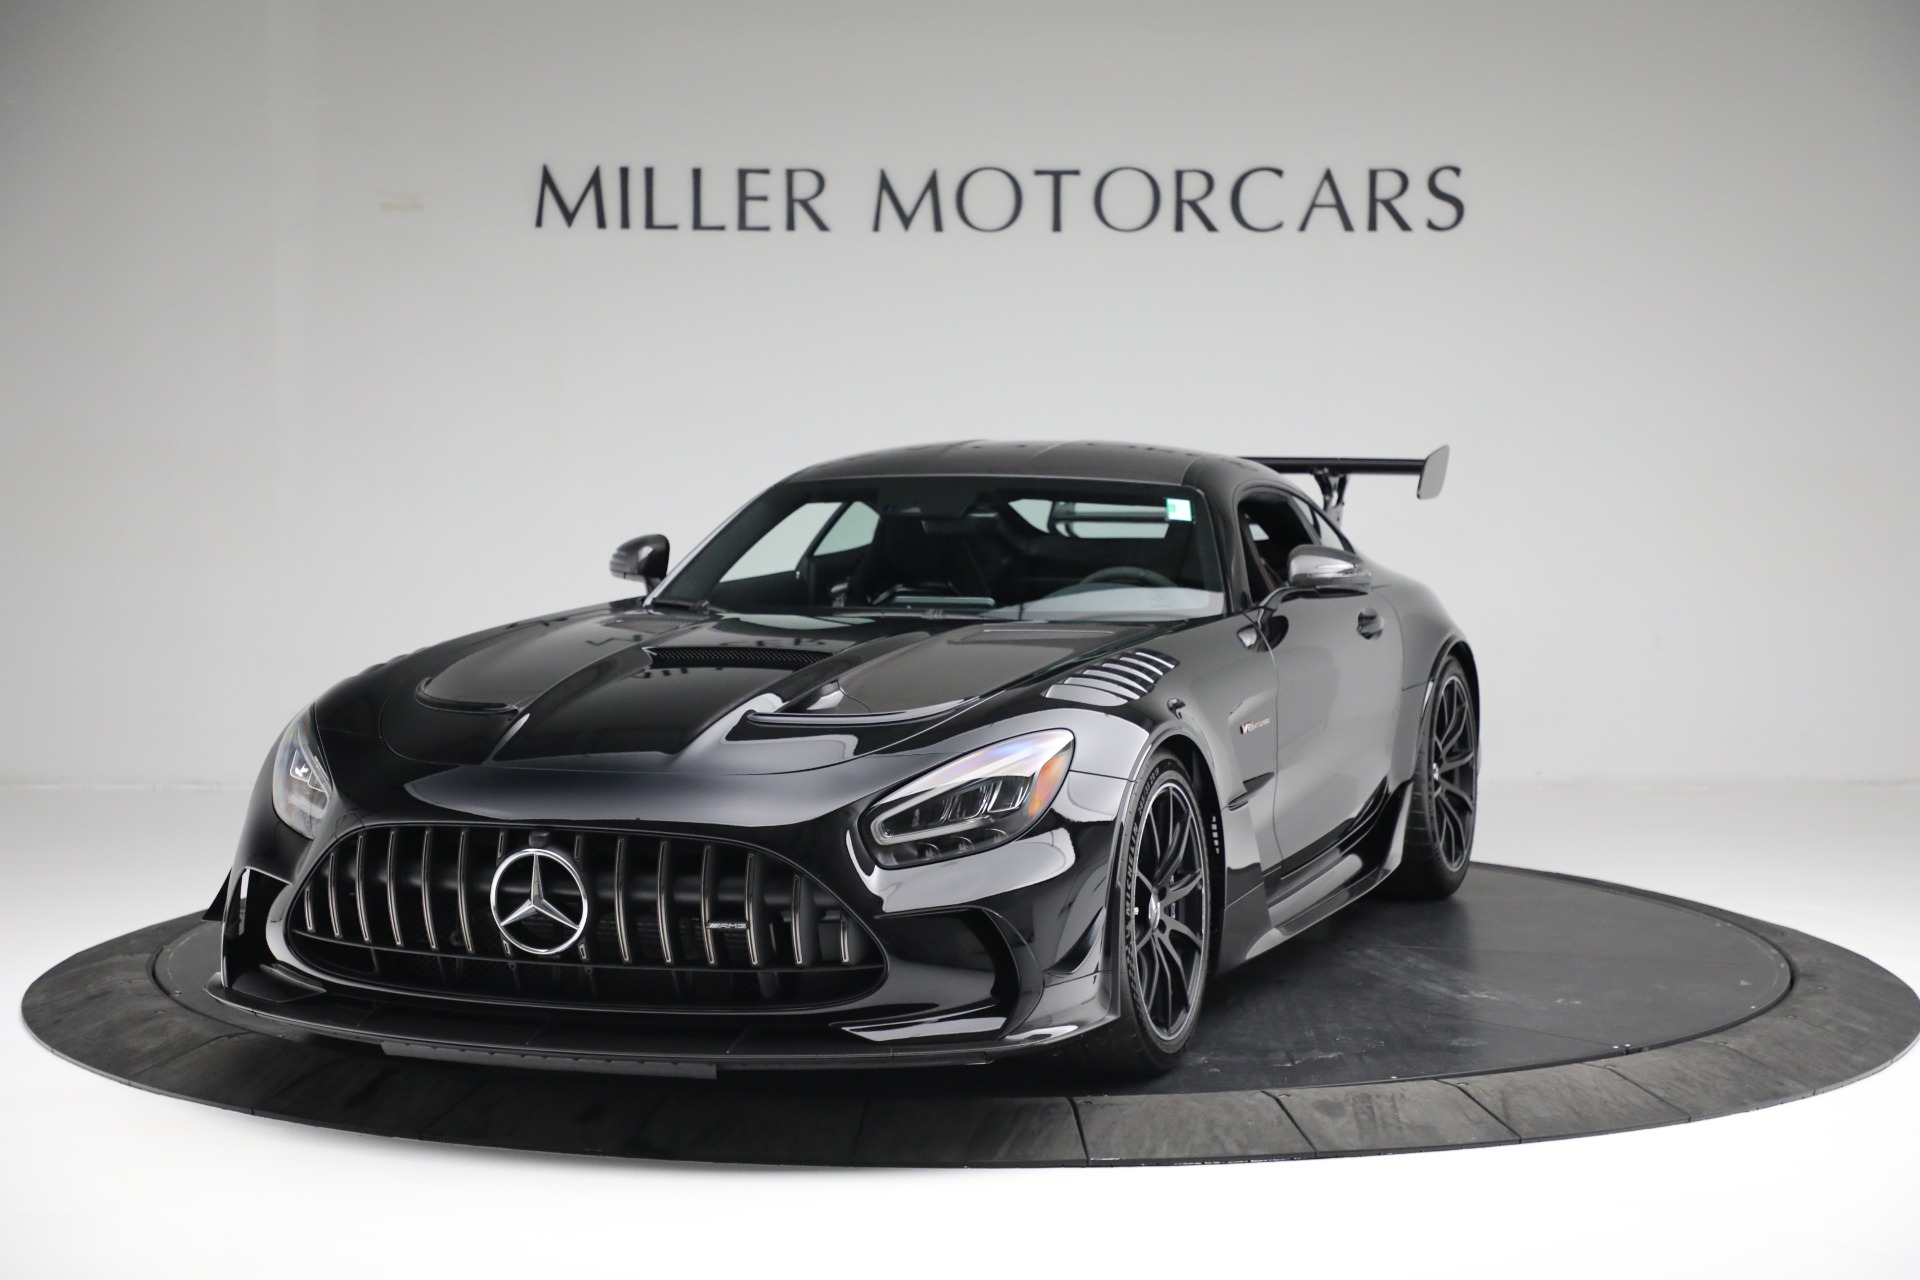 2021 Mercedes-AMG GT Black Series PVOTY Review: Hunter Killer